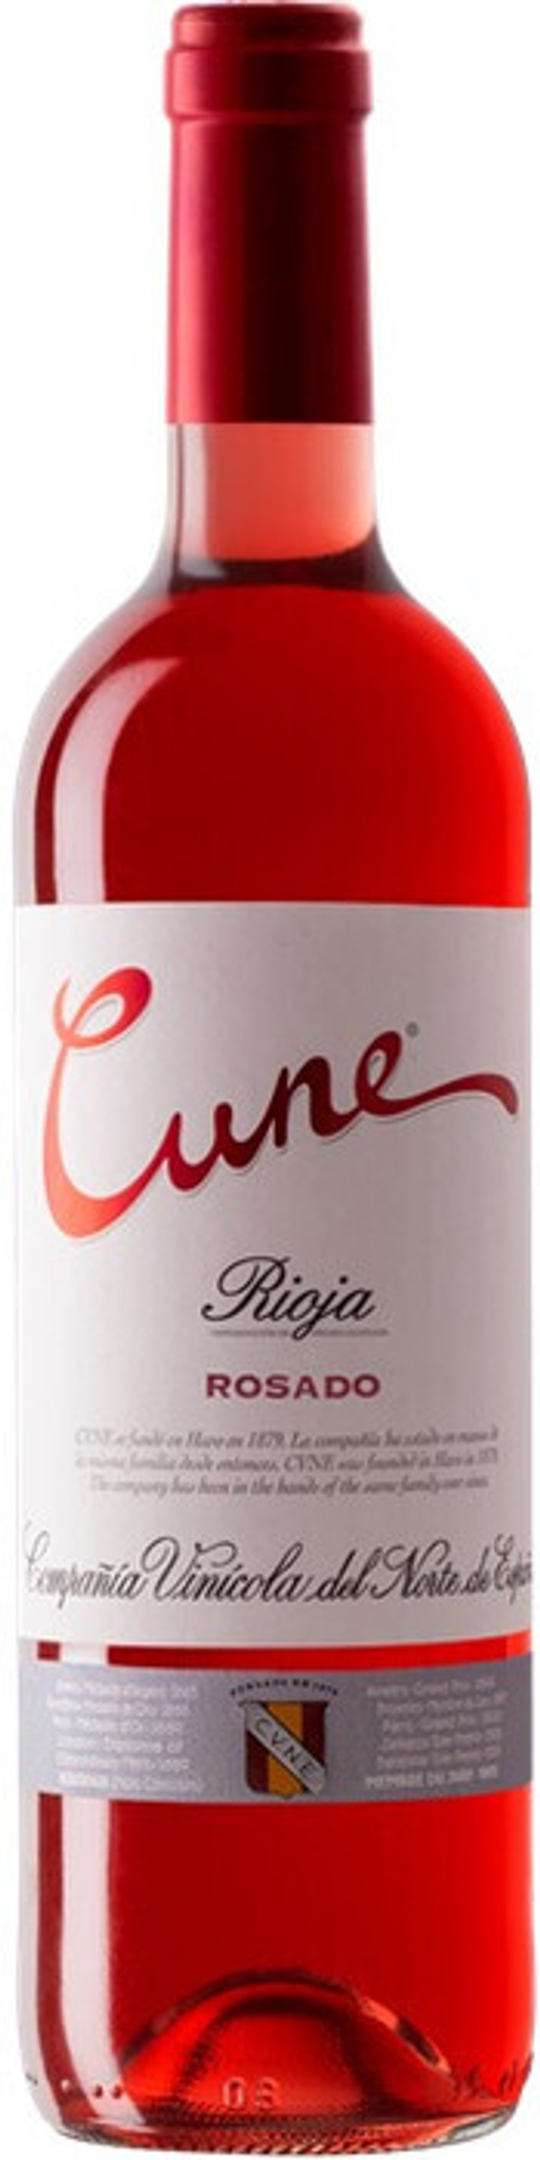 Вино Cune" Rosado Rioja DOC, 0,75 л.